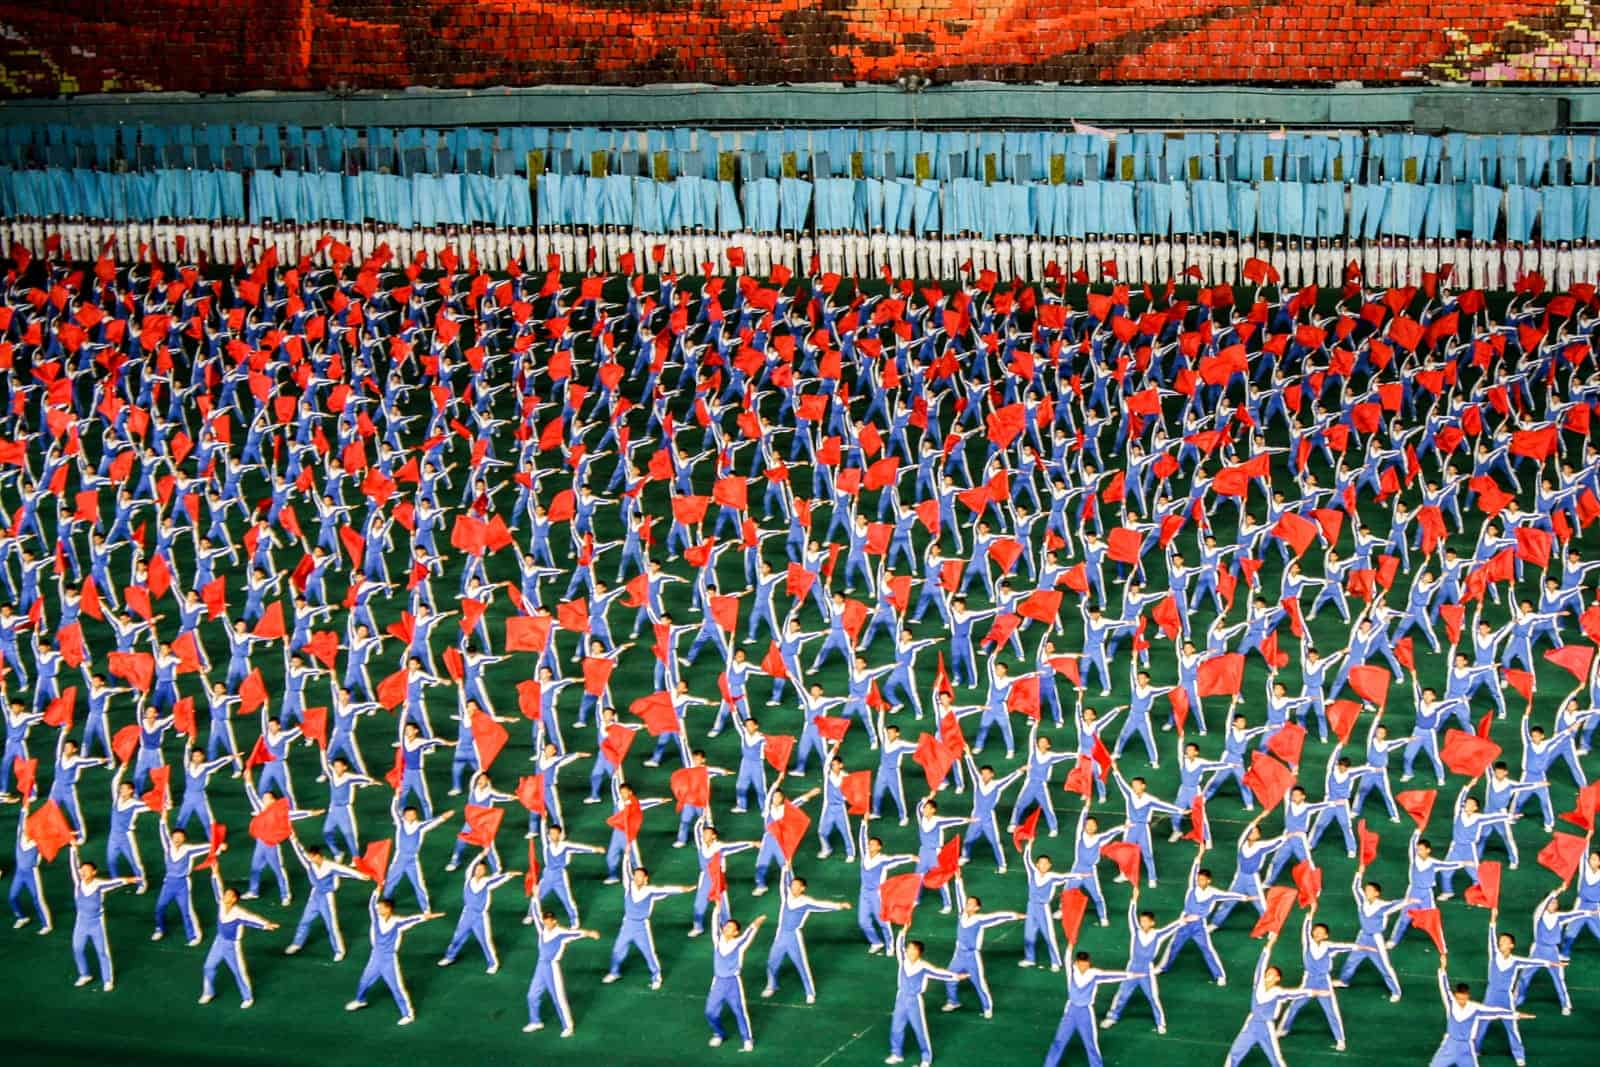 The Grand Mass Gymnastics and Artistic Performance Arirang in North Korea